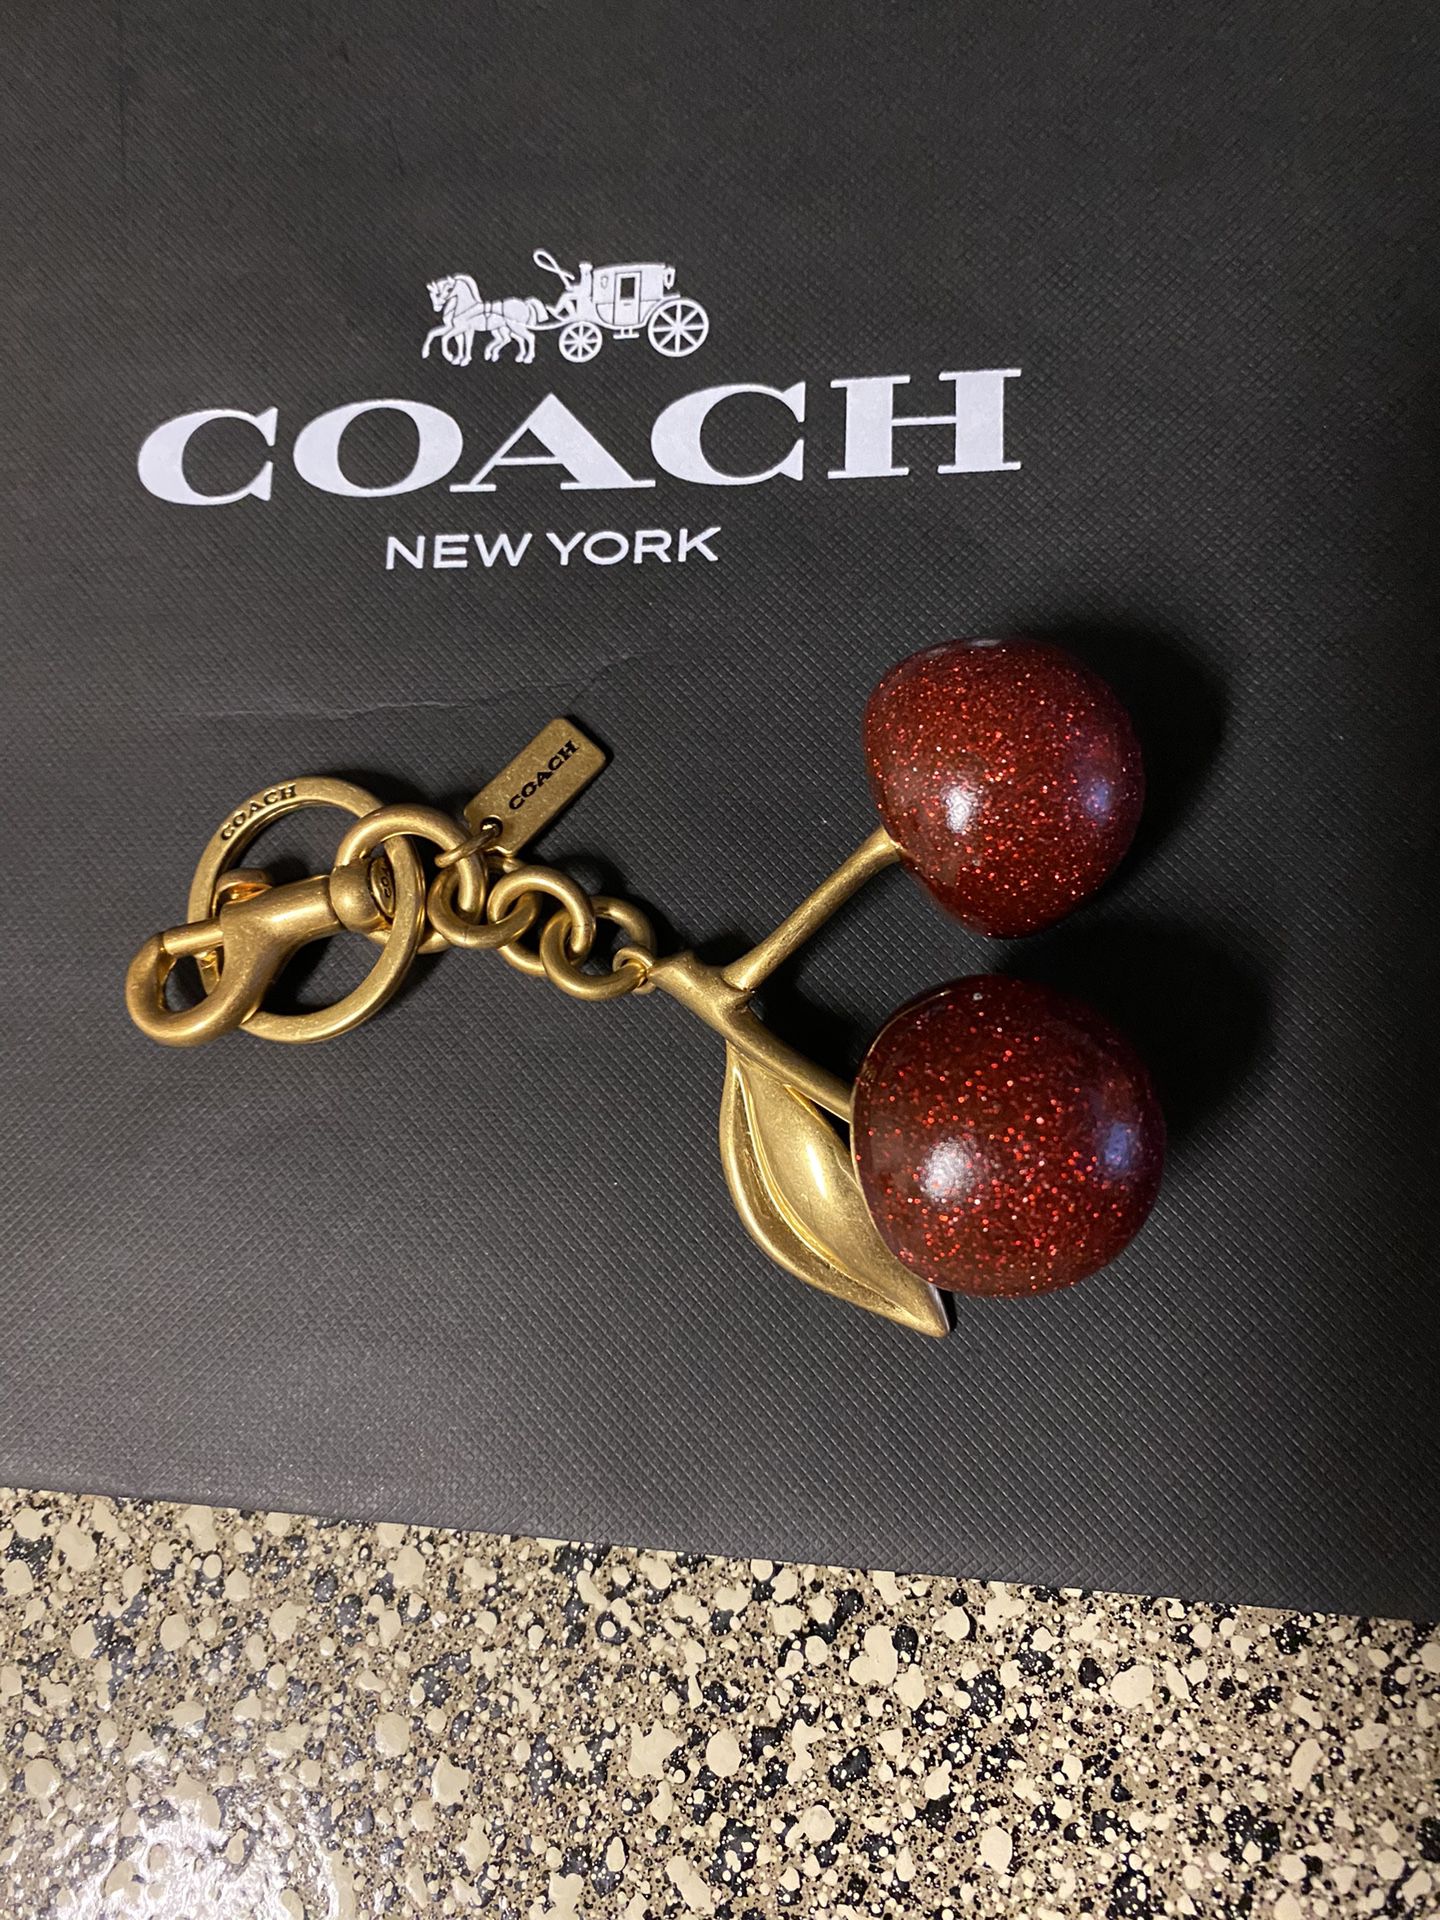 Coach - Cherry Bag Charm